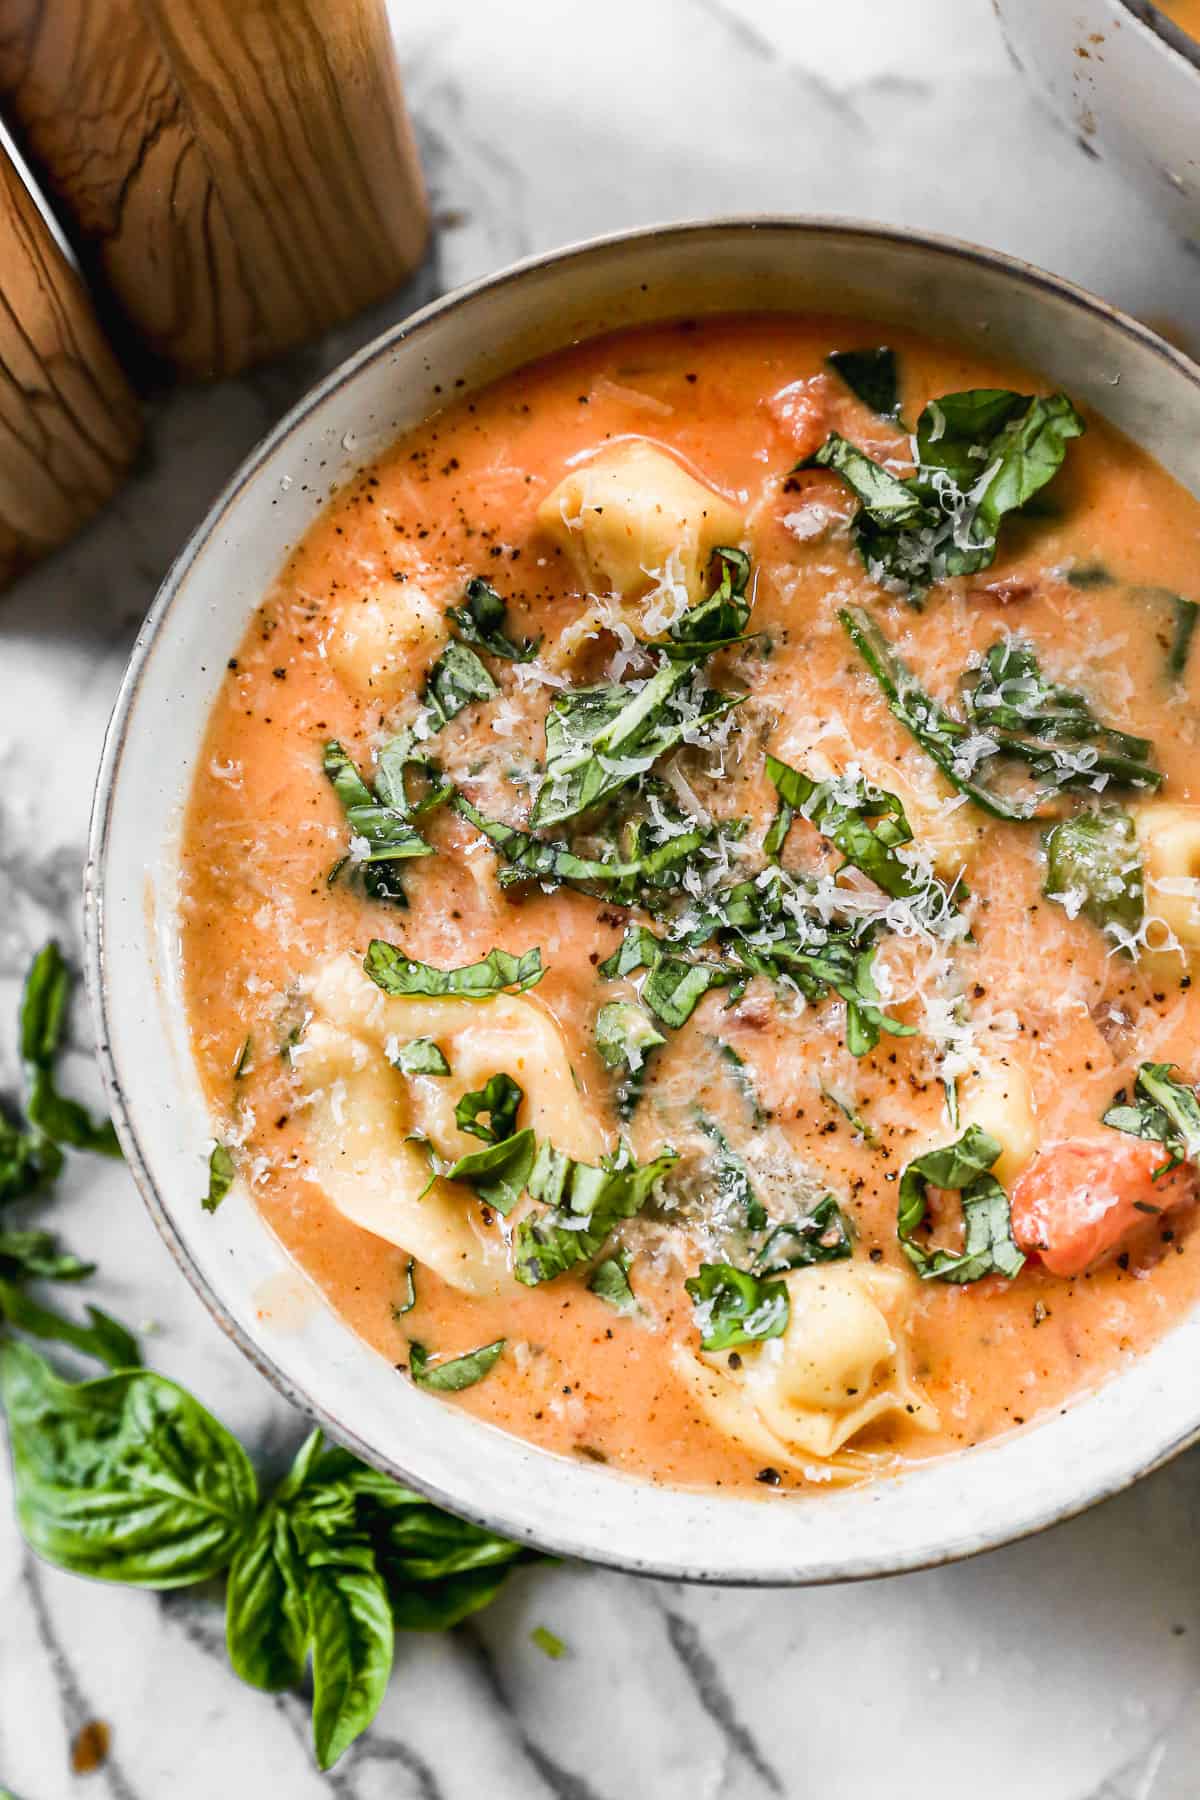 Gambar close-up semangkuk sup krim tortellinin buatan sendiri, dengan topping kemangi segar dan keju parmesan.  Siap dinikmati. 